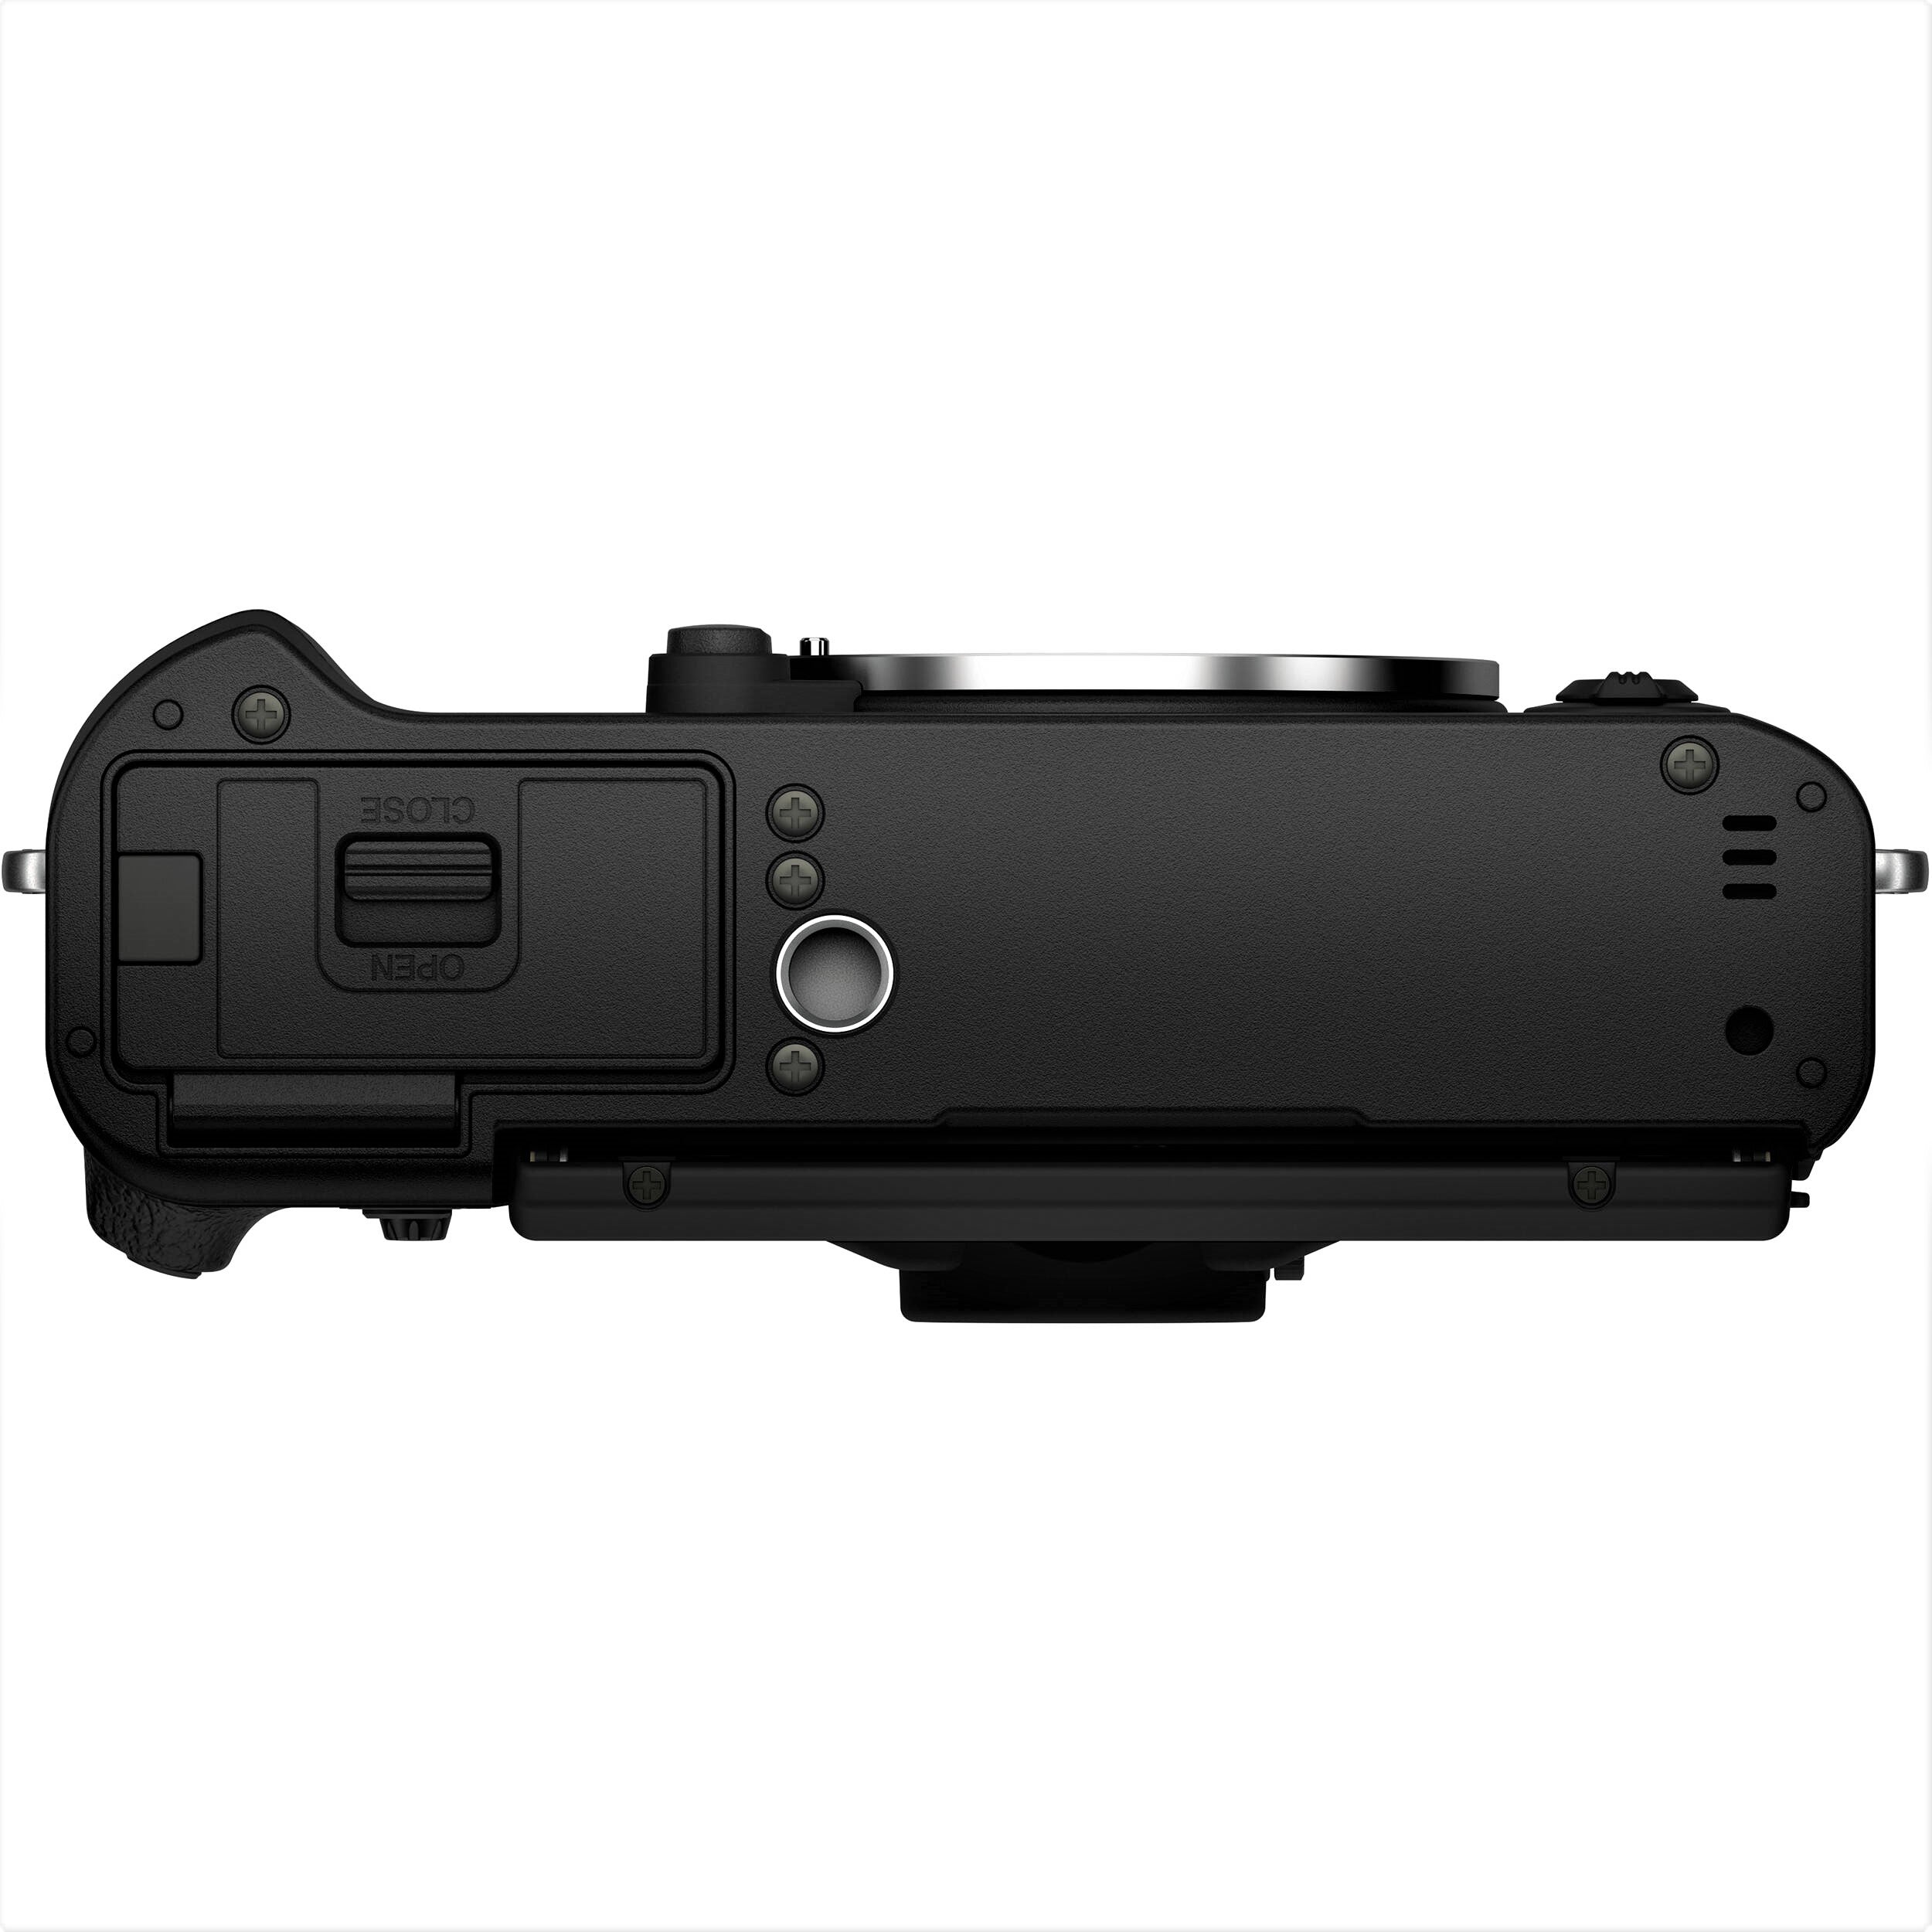 Fujifilm X-T30 II Mirrorless Camera (Black) - Bottom View